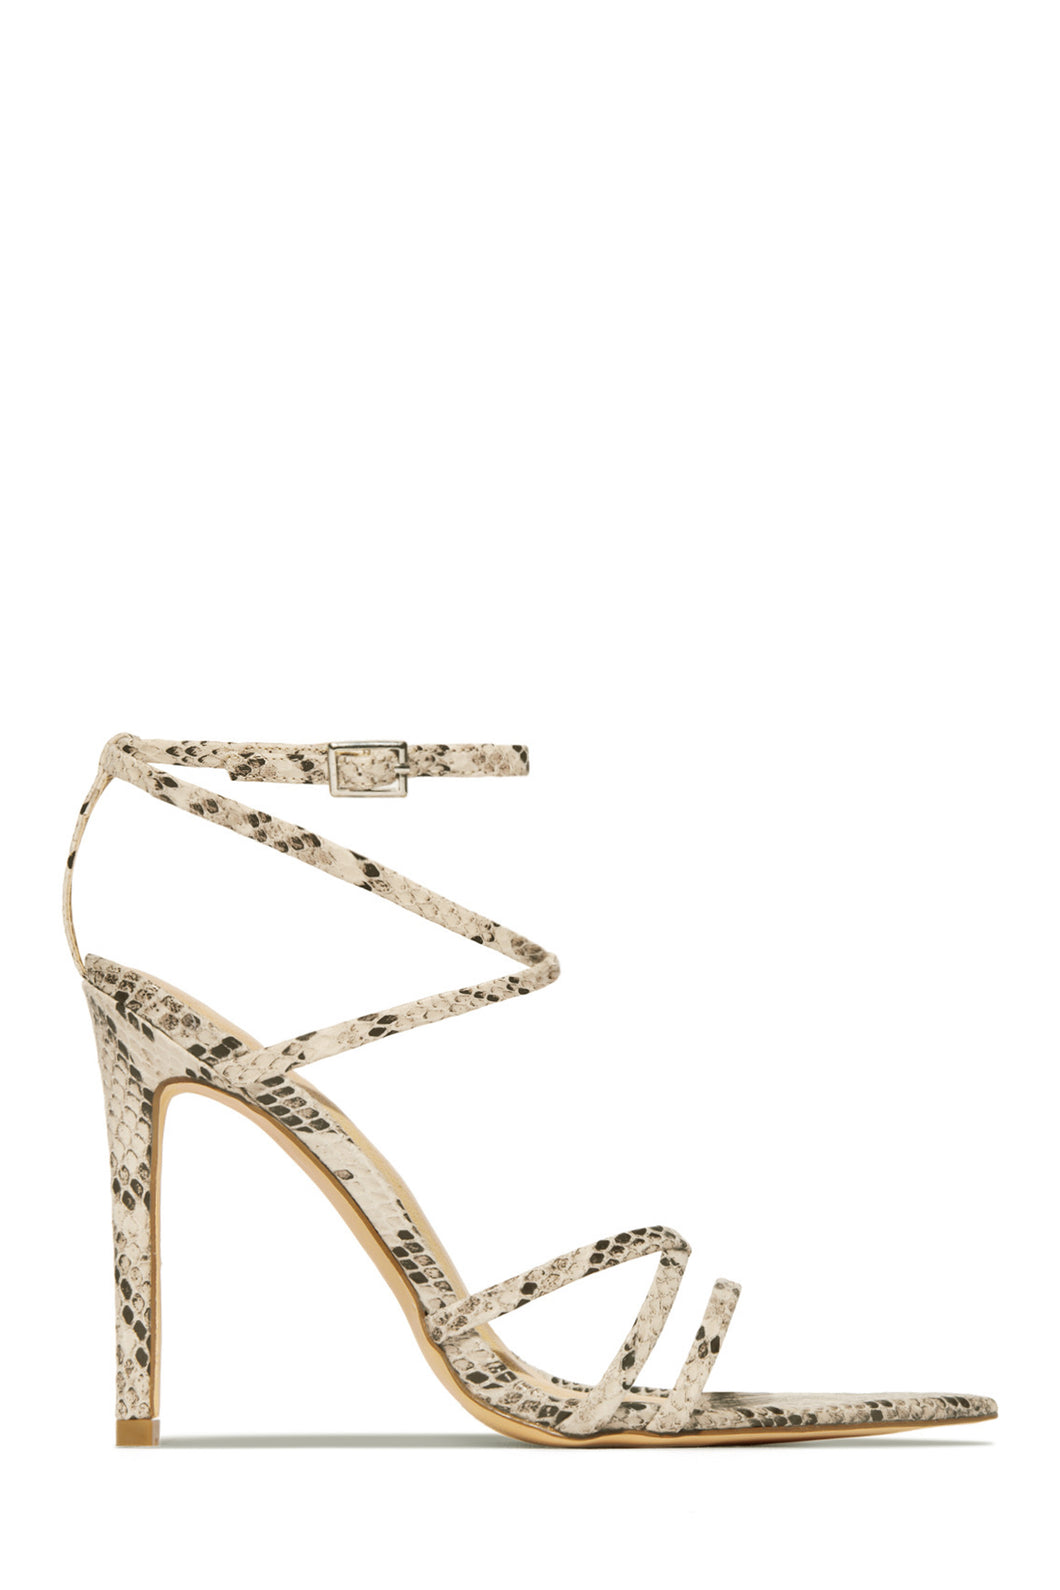 Jimmy Choo Leslie Gold Champagne Glitter Strappy Caged Heels Sandals Size  EU 38 | eBay